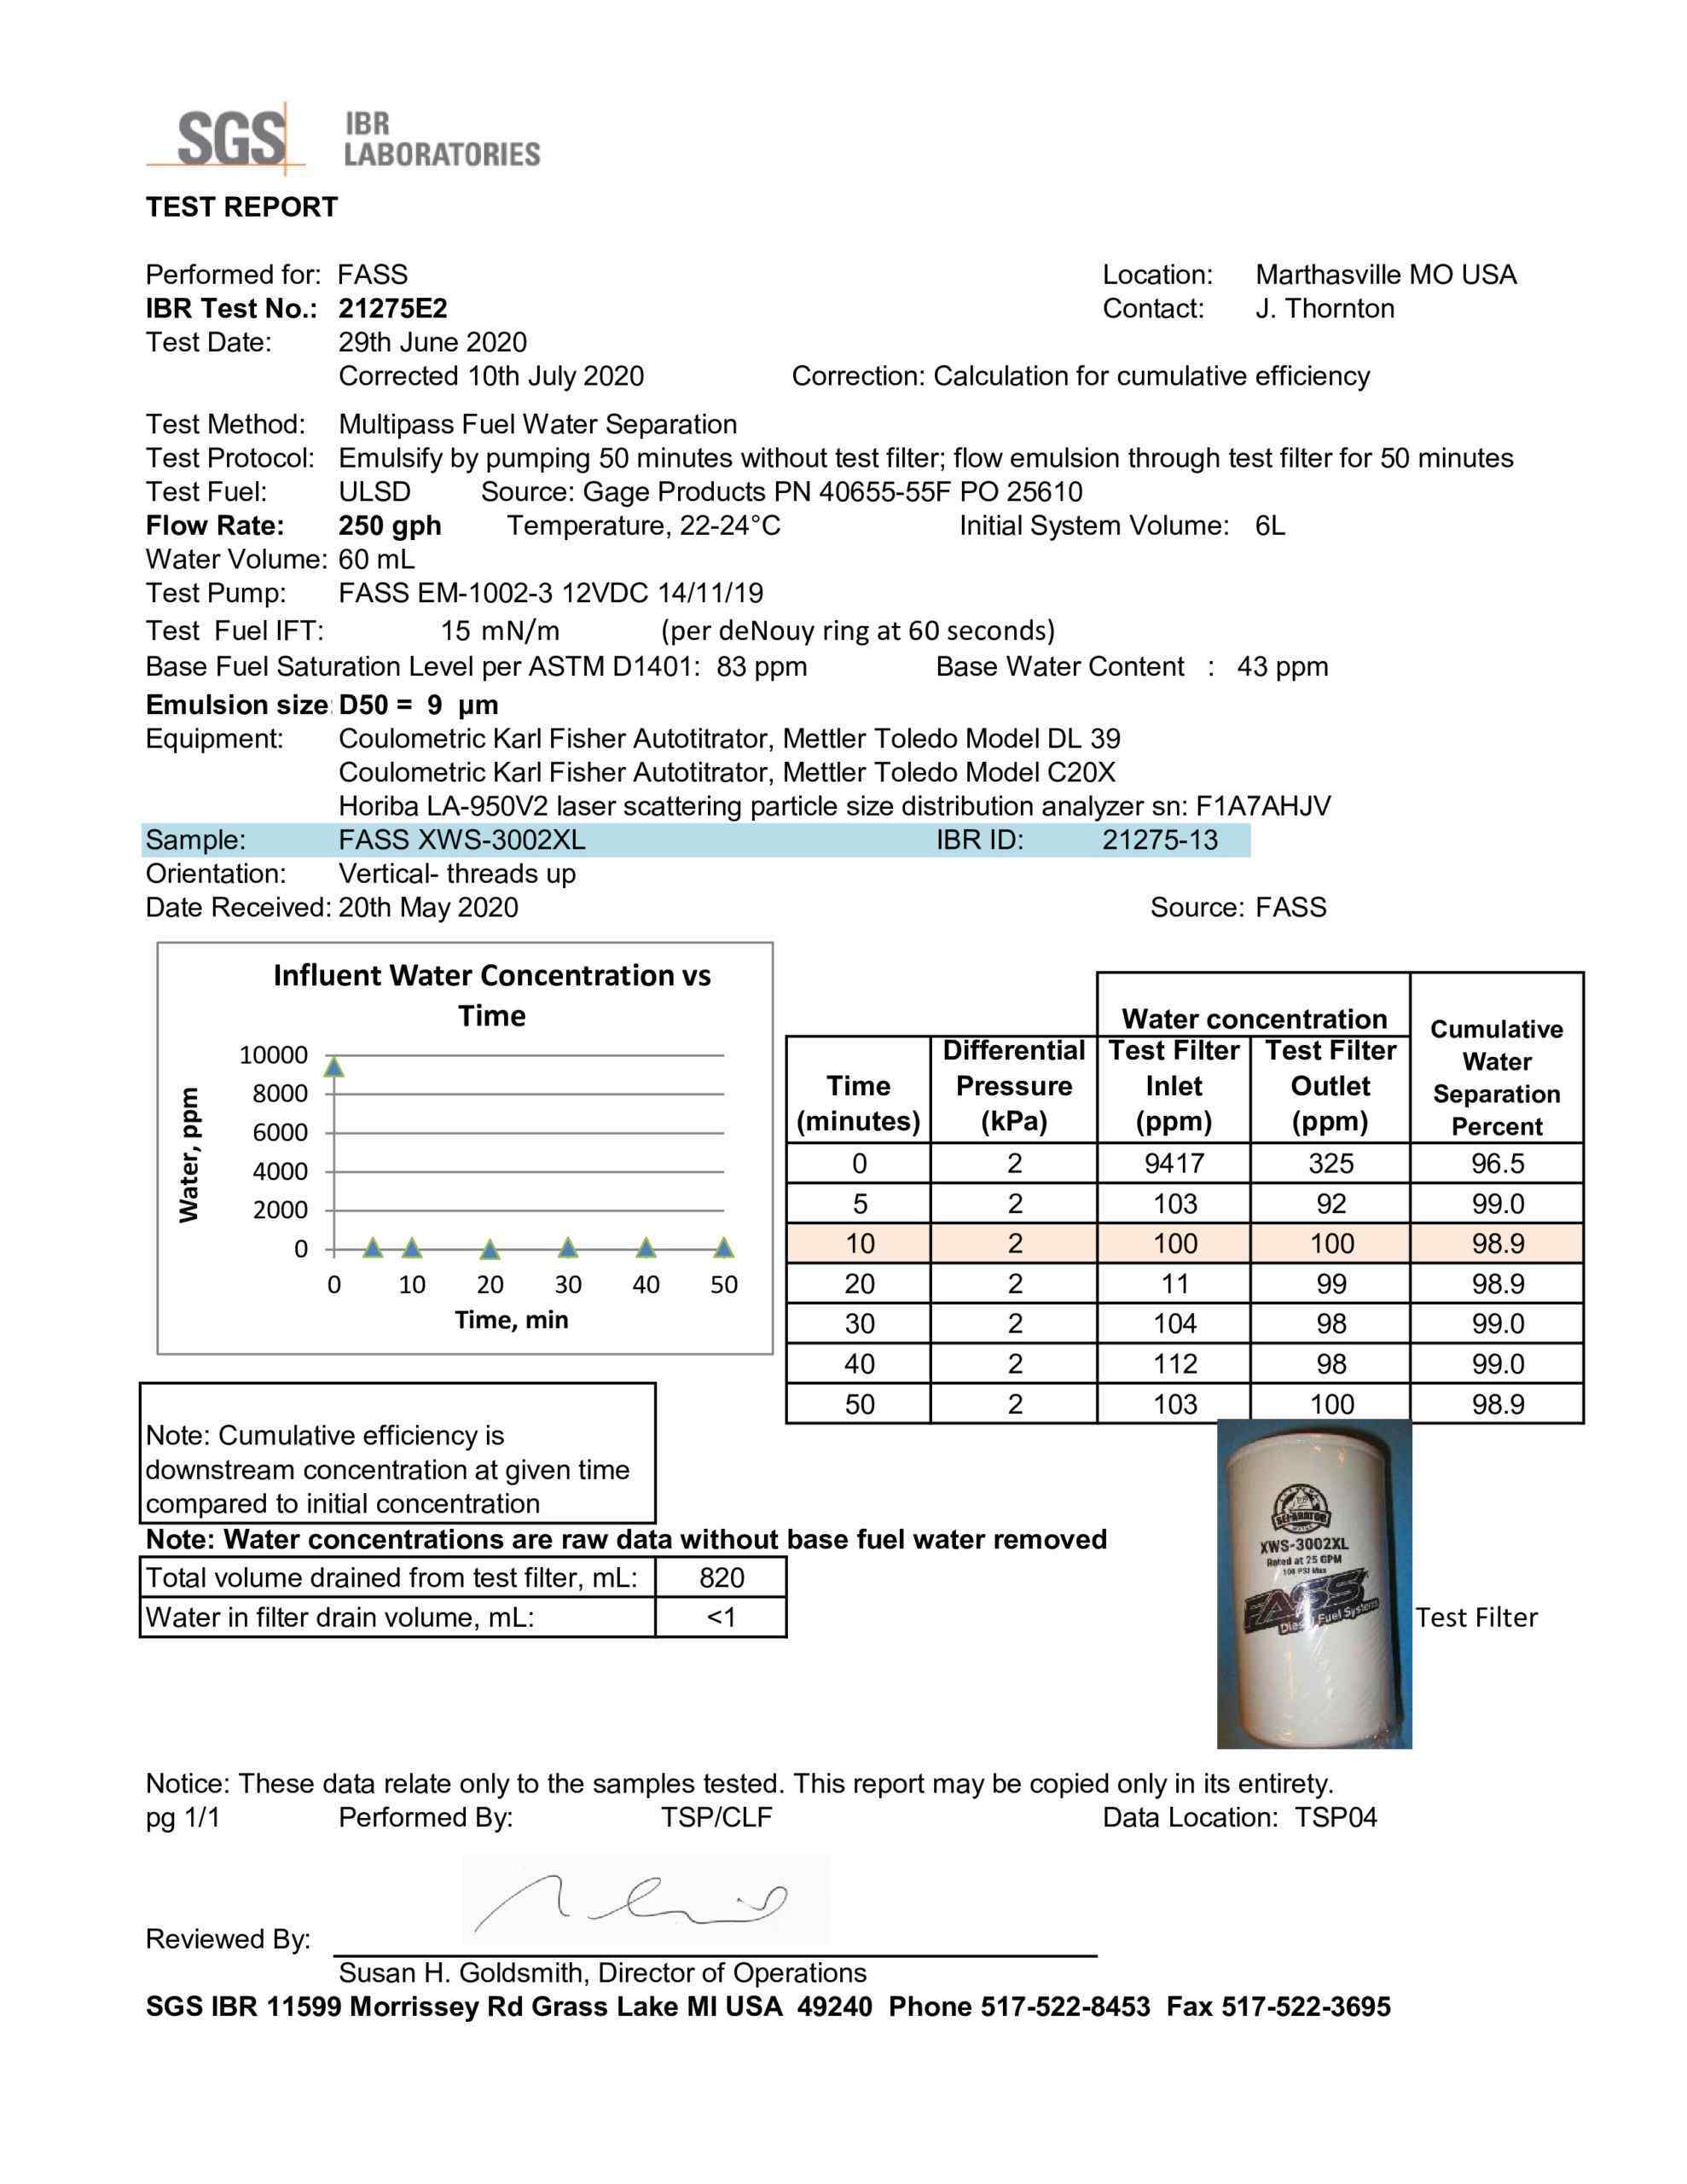 FASS XWS-3002XL Fuel Filter Test Results (250GPH)